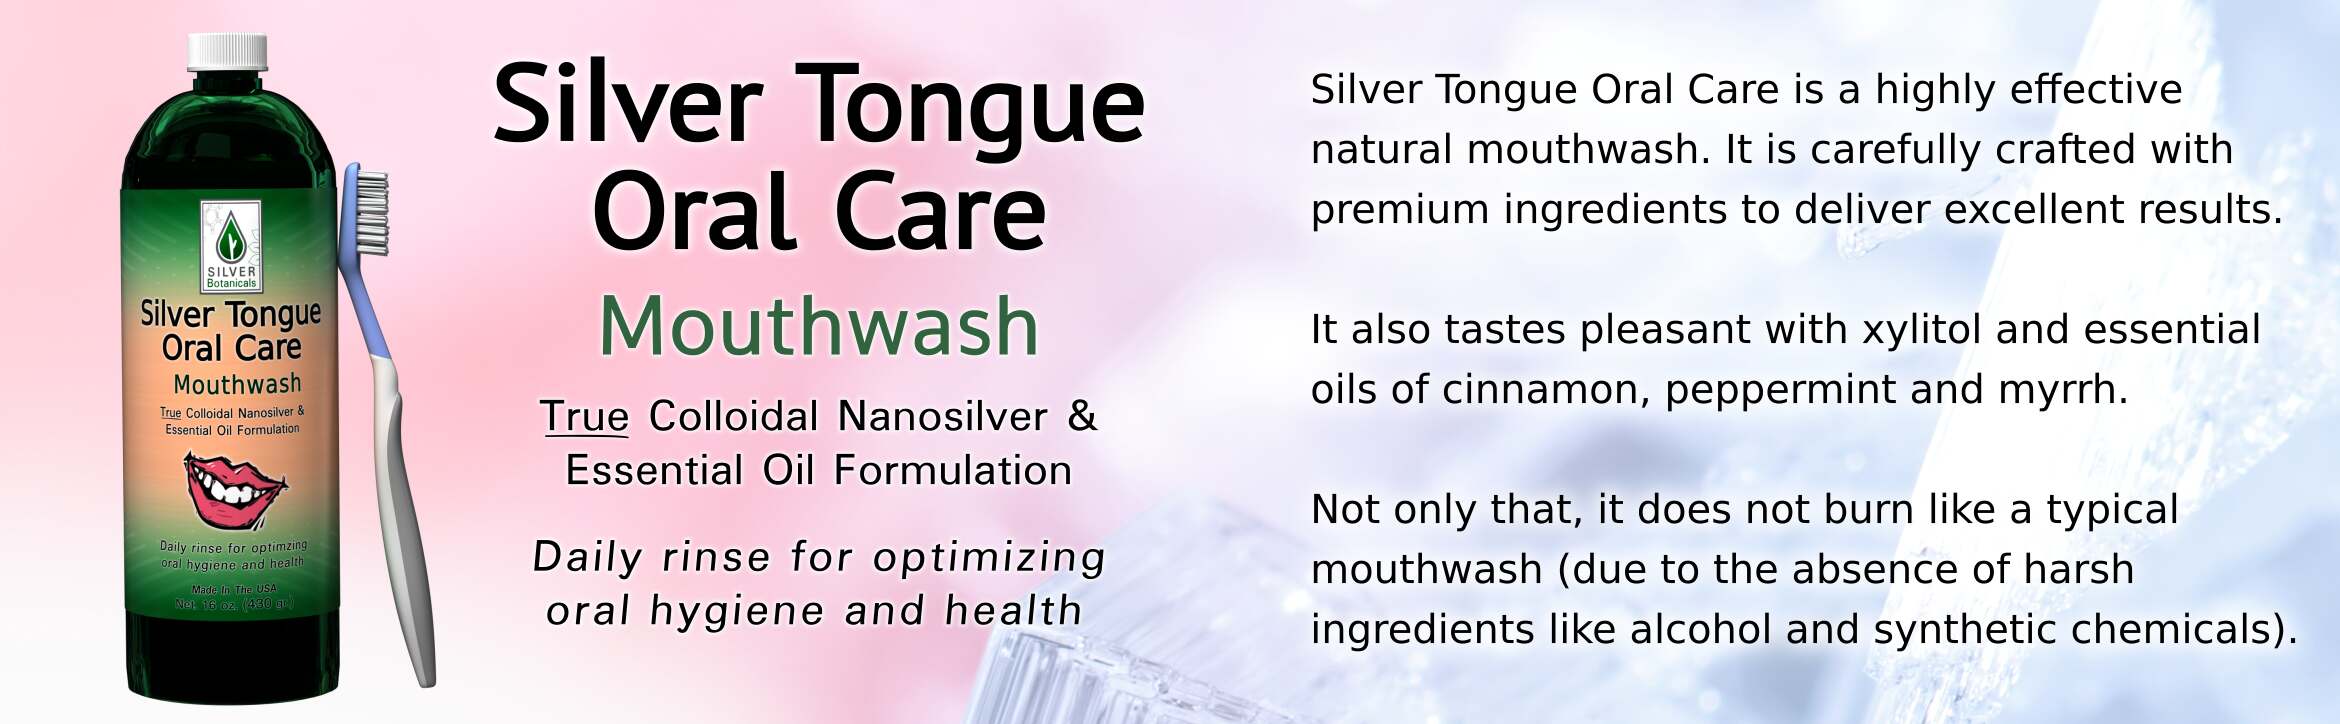 Silver Tongue Oral Care Mouthwash